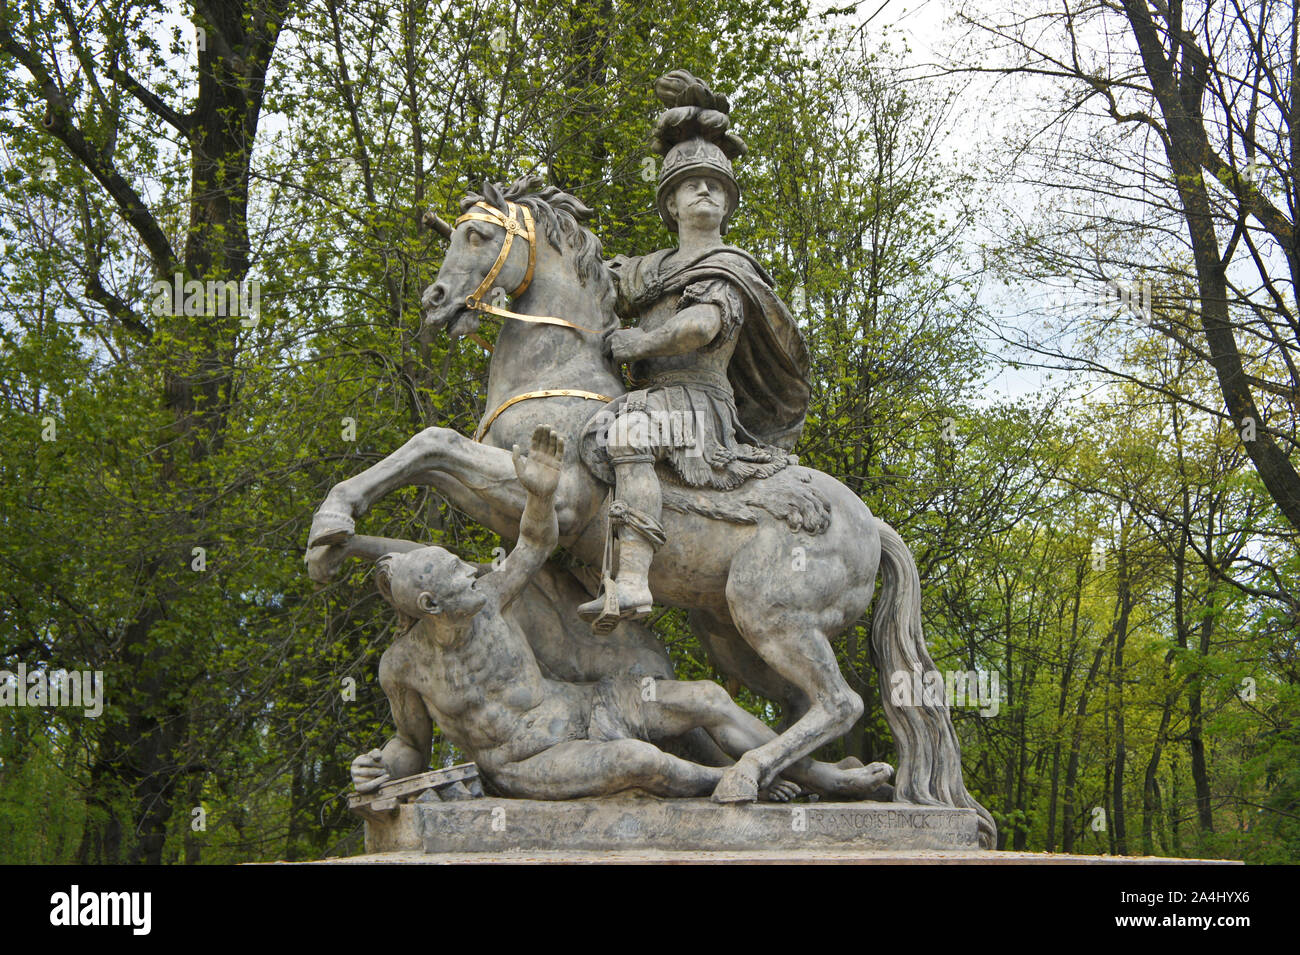 The Jan Sobieski statue in Lazienki Park. Monument of Sobieski in Warsaw. Poland. Stock Photo